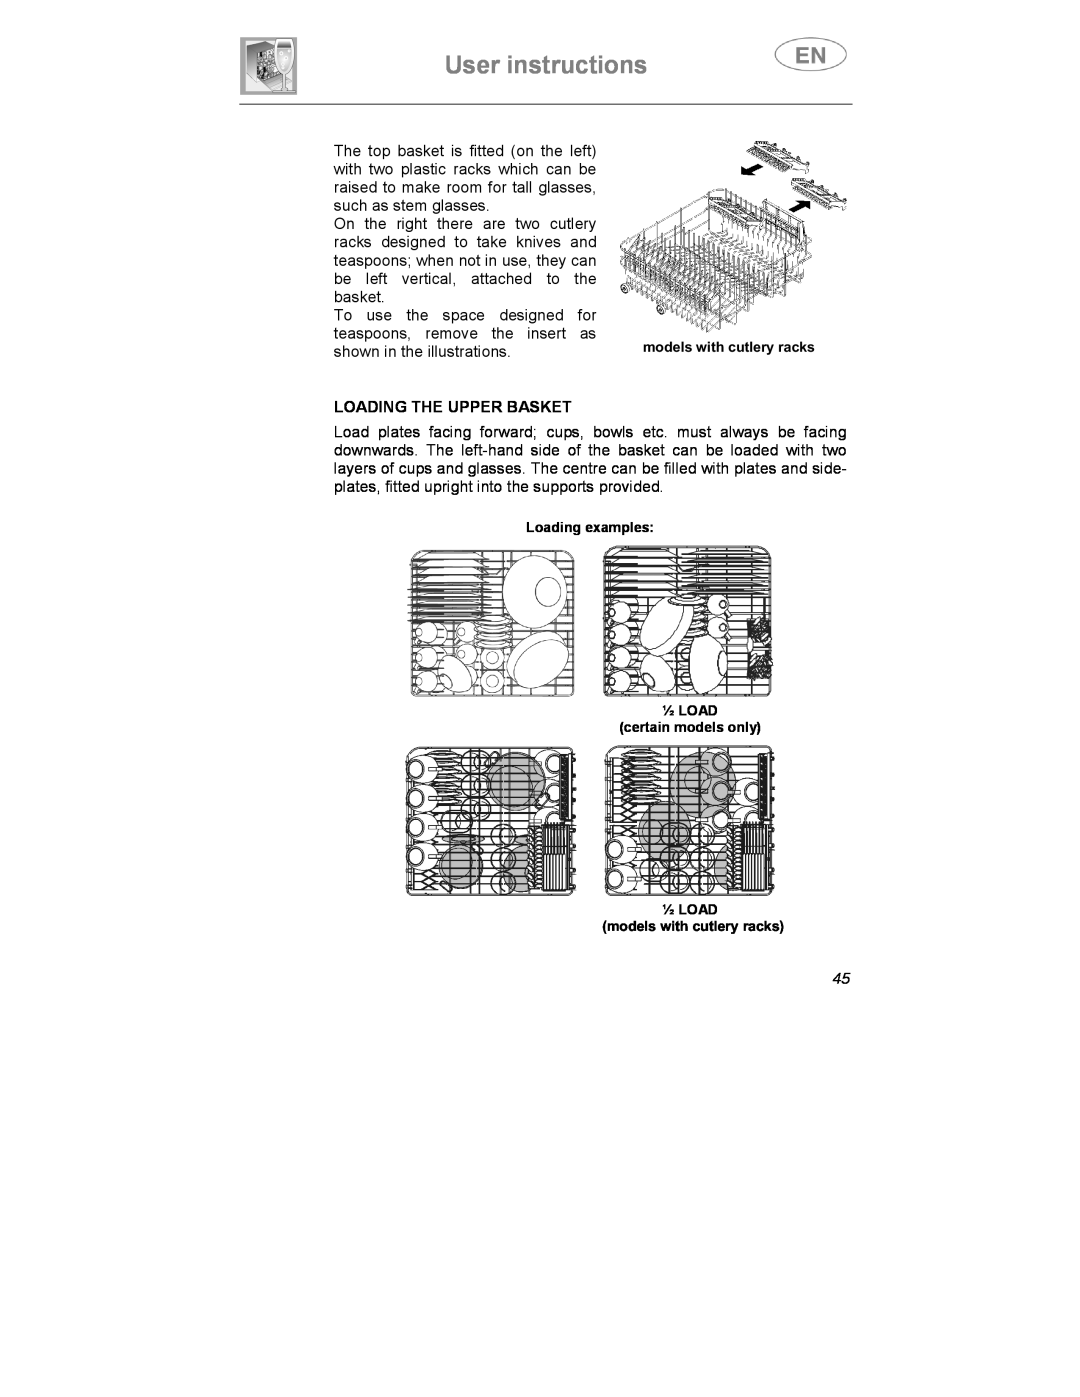 Smeg SDCY66X1, SDCY66-1 instruction manual User instructions, Loading The Upper Basket 